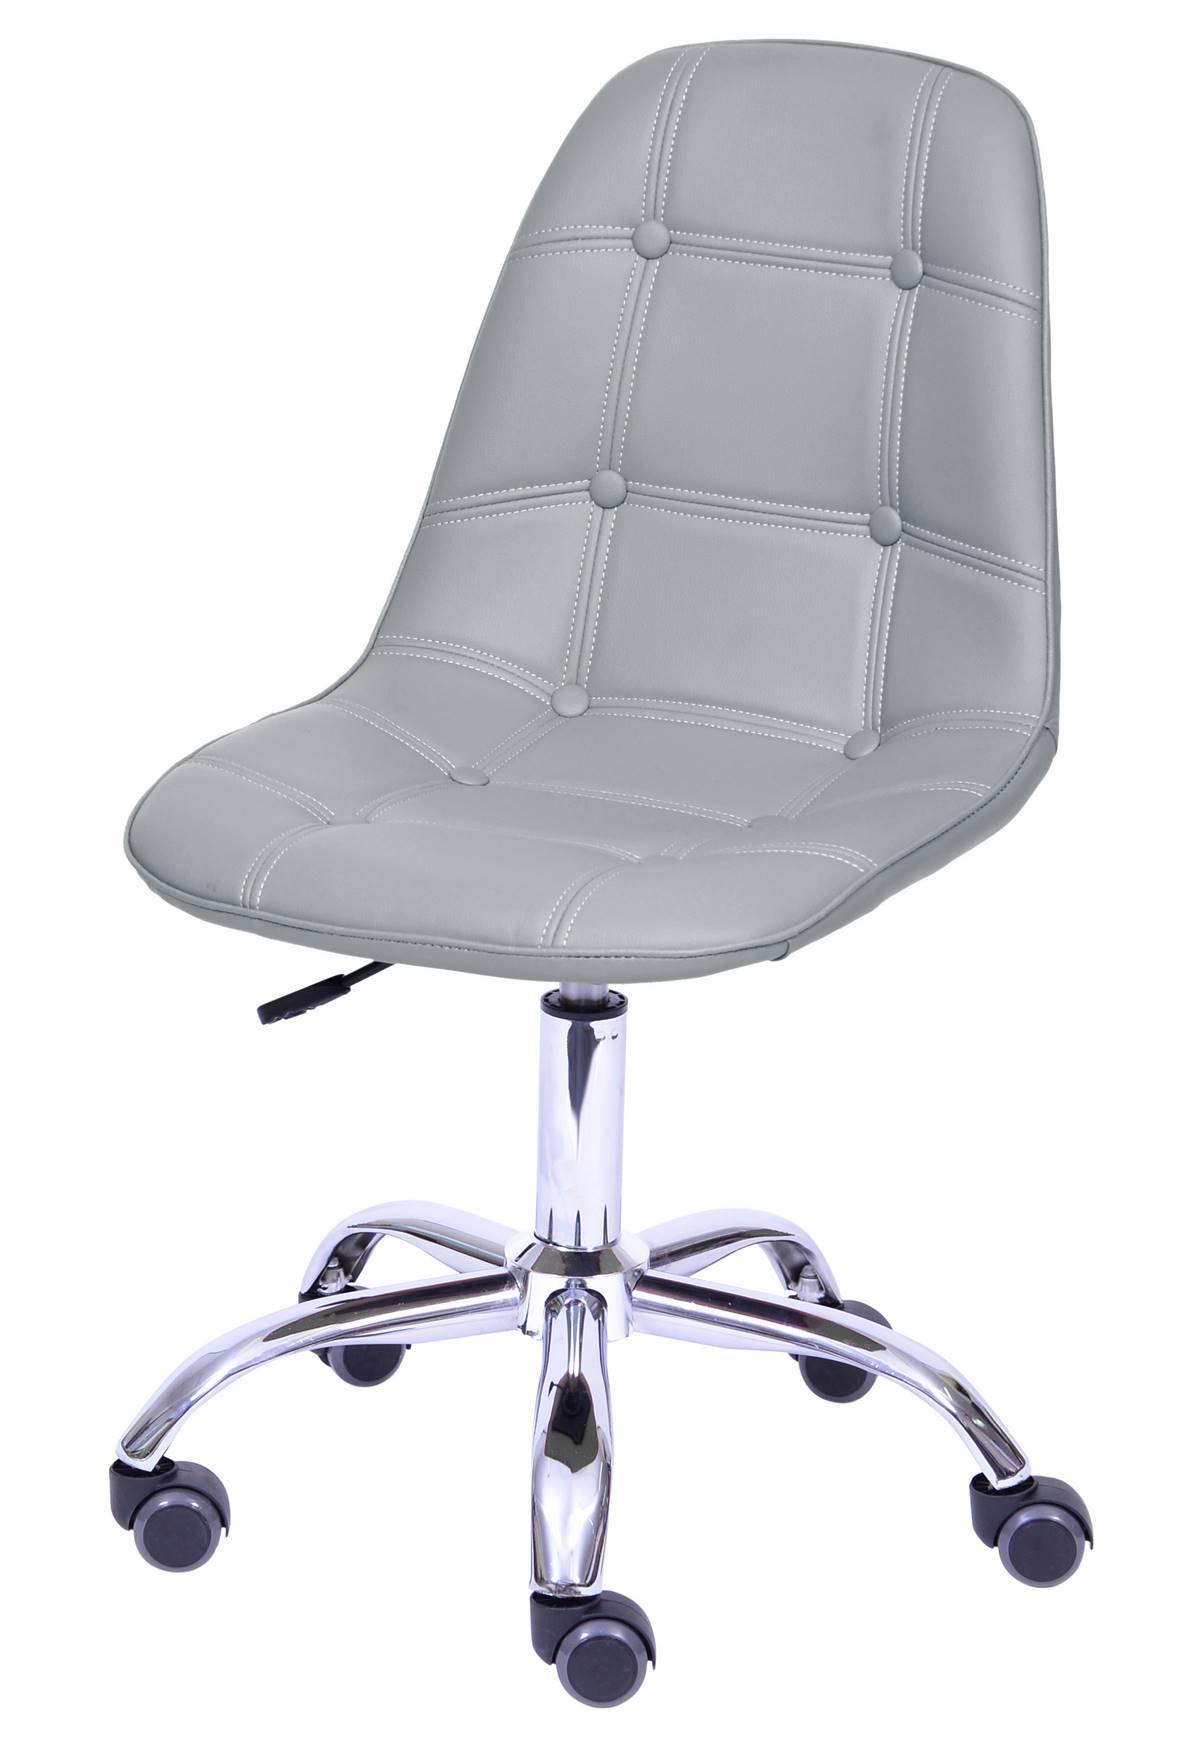 Cadeira Eames Botone Cinza com Base Rodizio - 54689